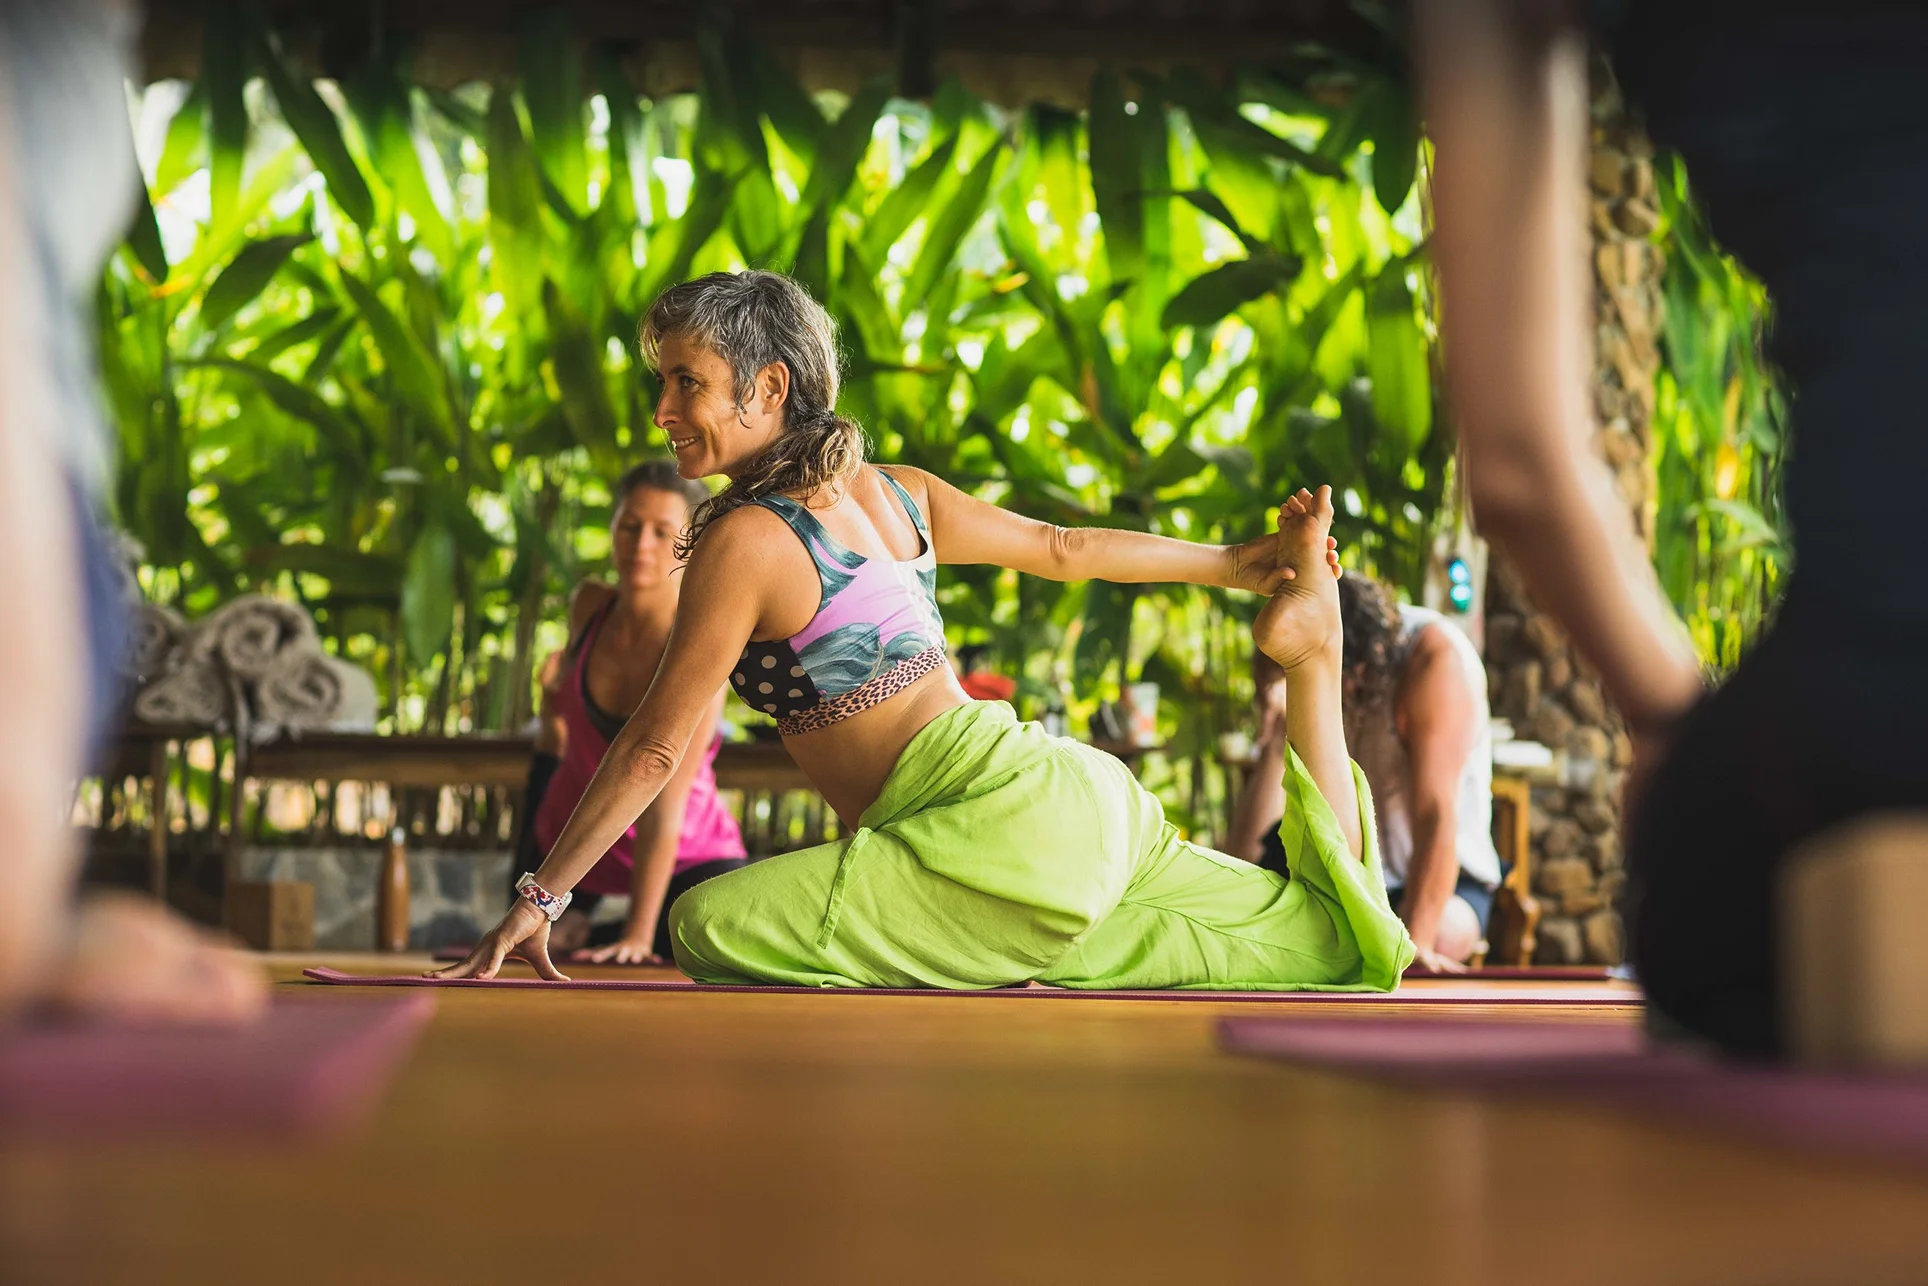 6 day undertheskin retreat, thai massage course in las palmas, spain251707824768.webp